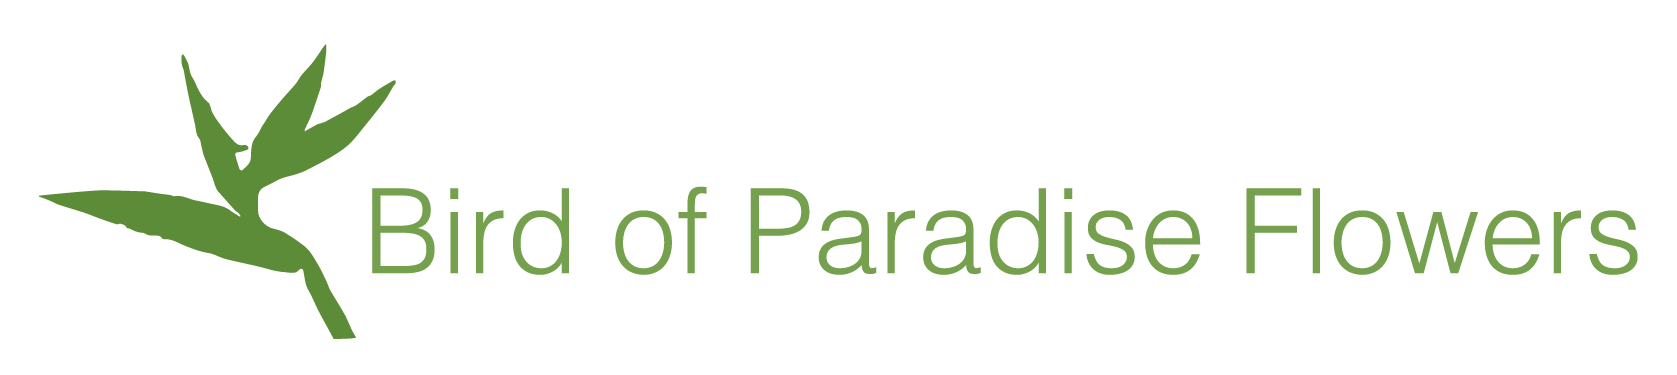 Paradise Flower Logo - Valentine's Day Flower Deals - Archive - Bird of Paradise Flowers